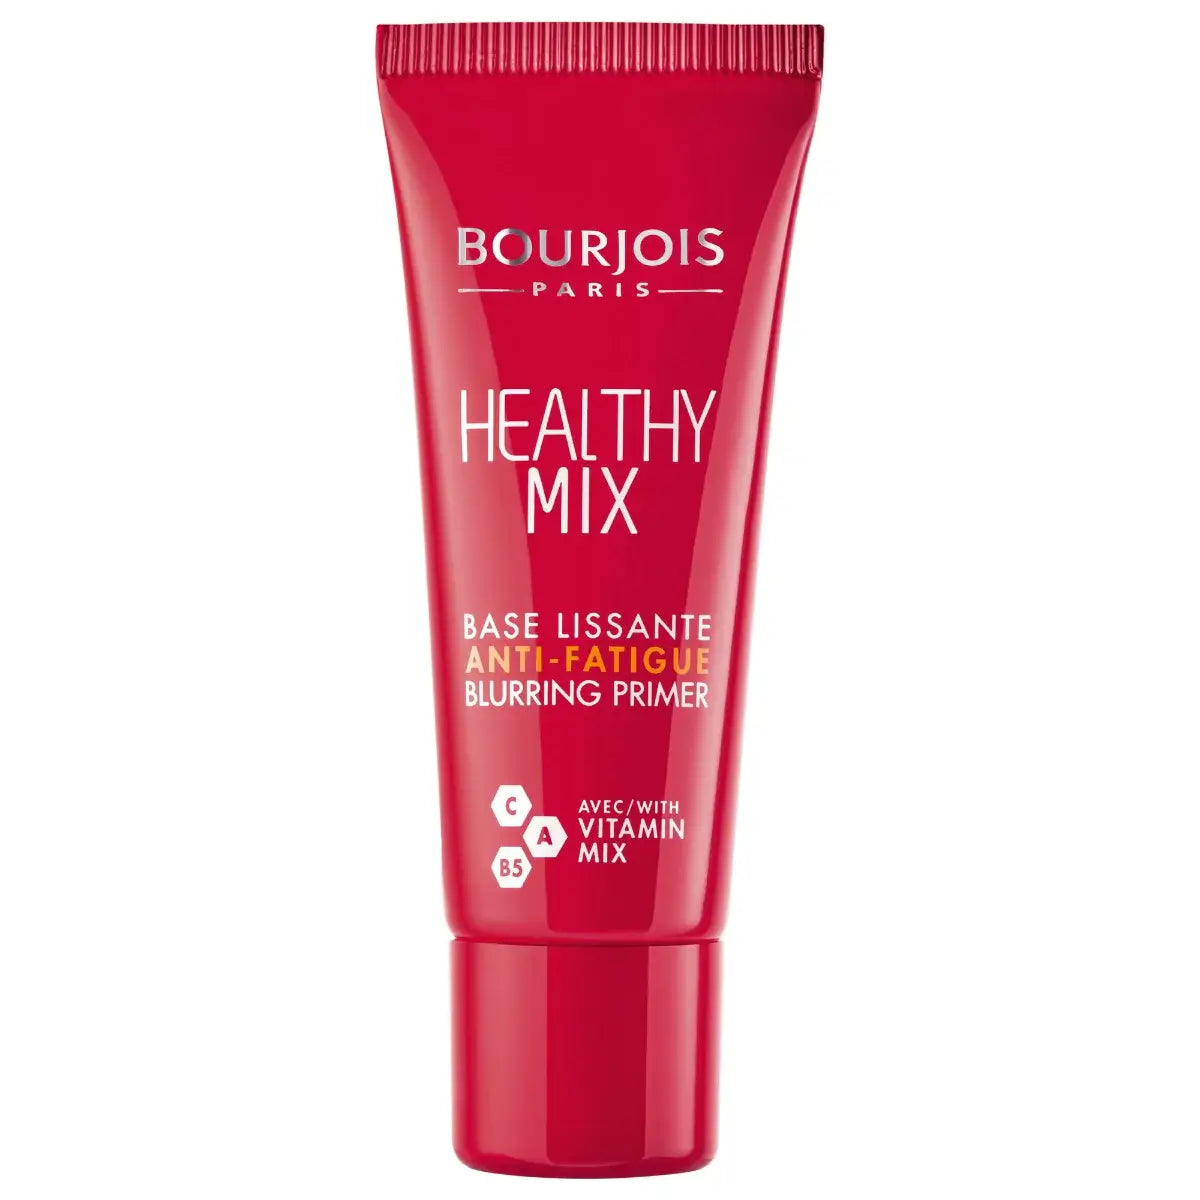 Bourjois Healthy Mix Anti-Fatigue Mix Blurring Primer